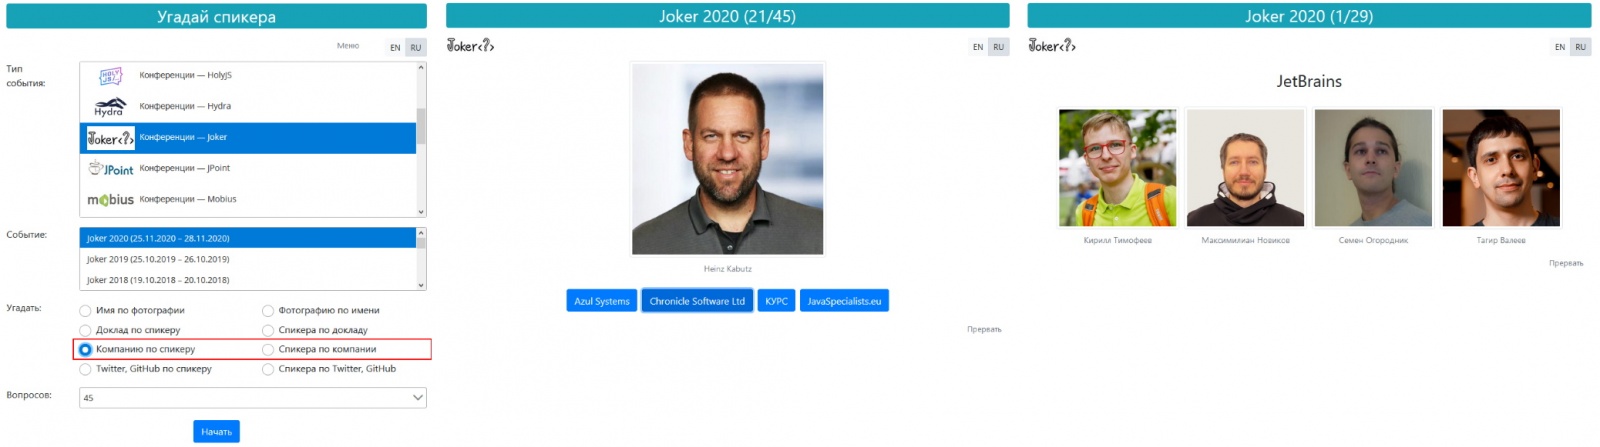 Joker 2020: продолжение сезона онлайн-конференций - 16